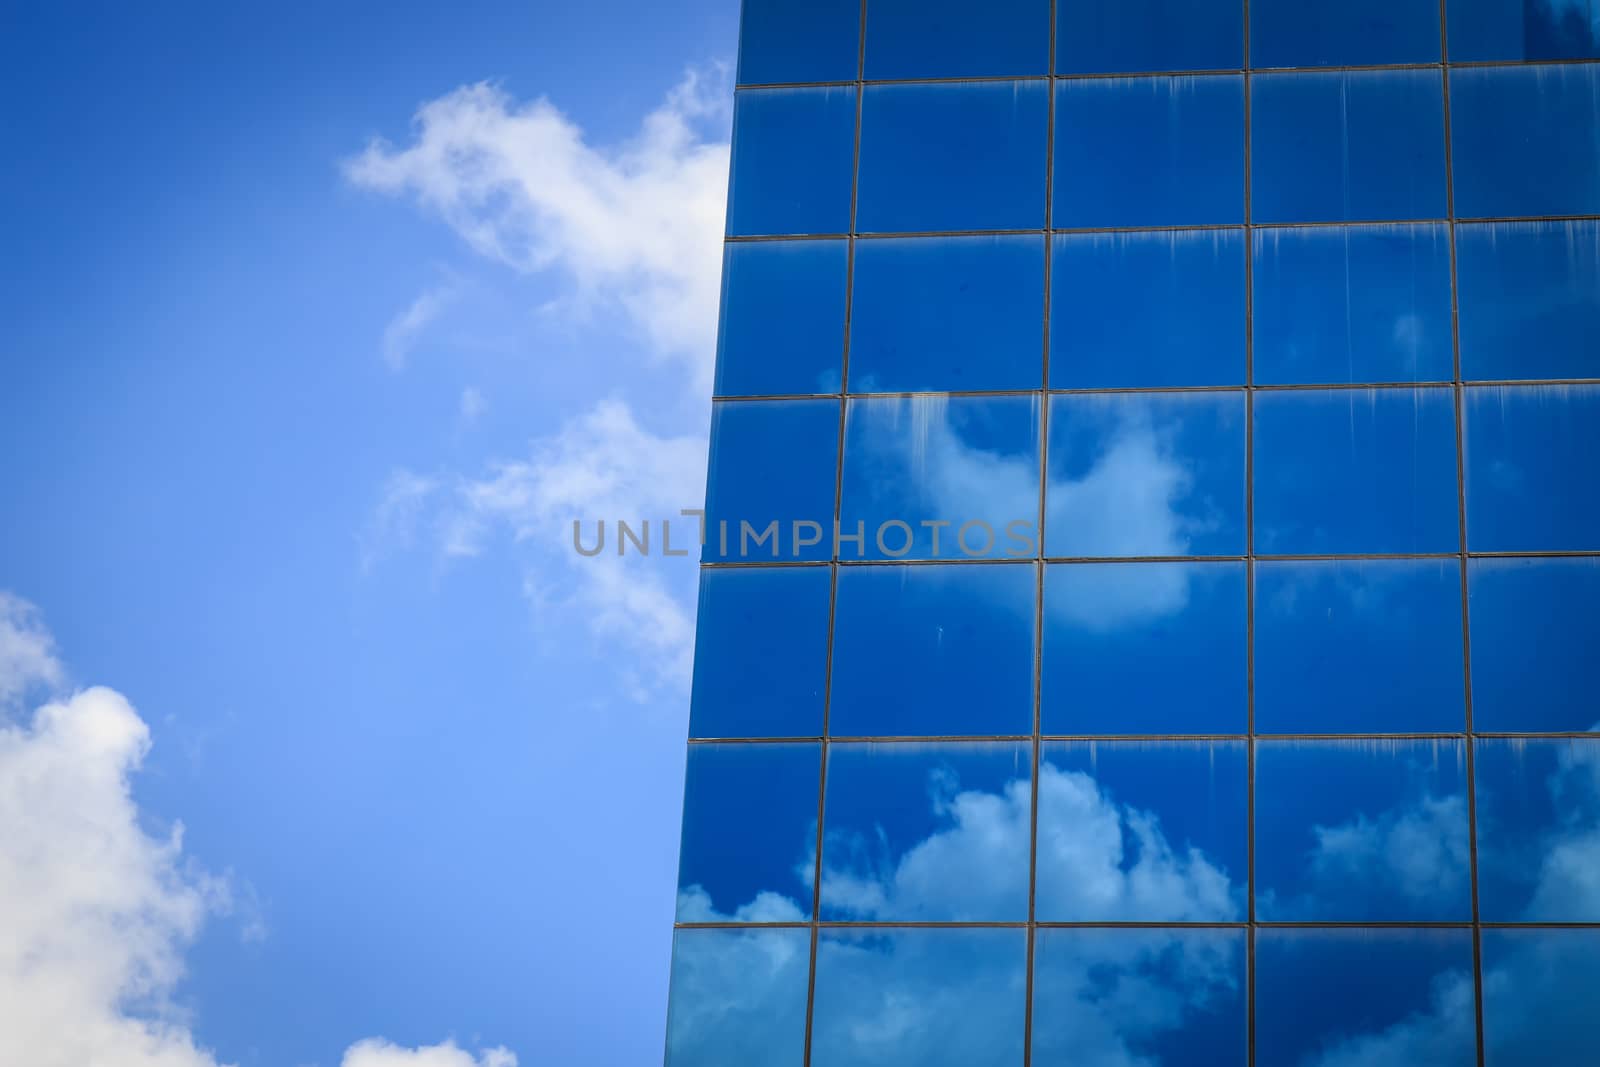 window reflection dayligh as blue background by nanDphanuwat